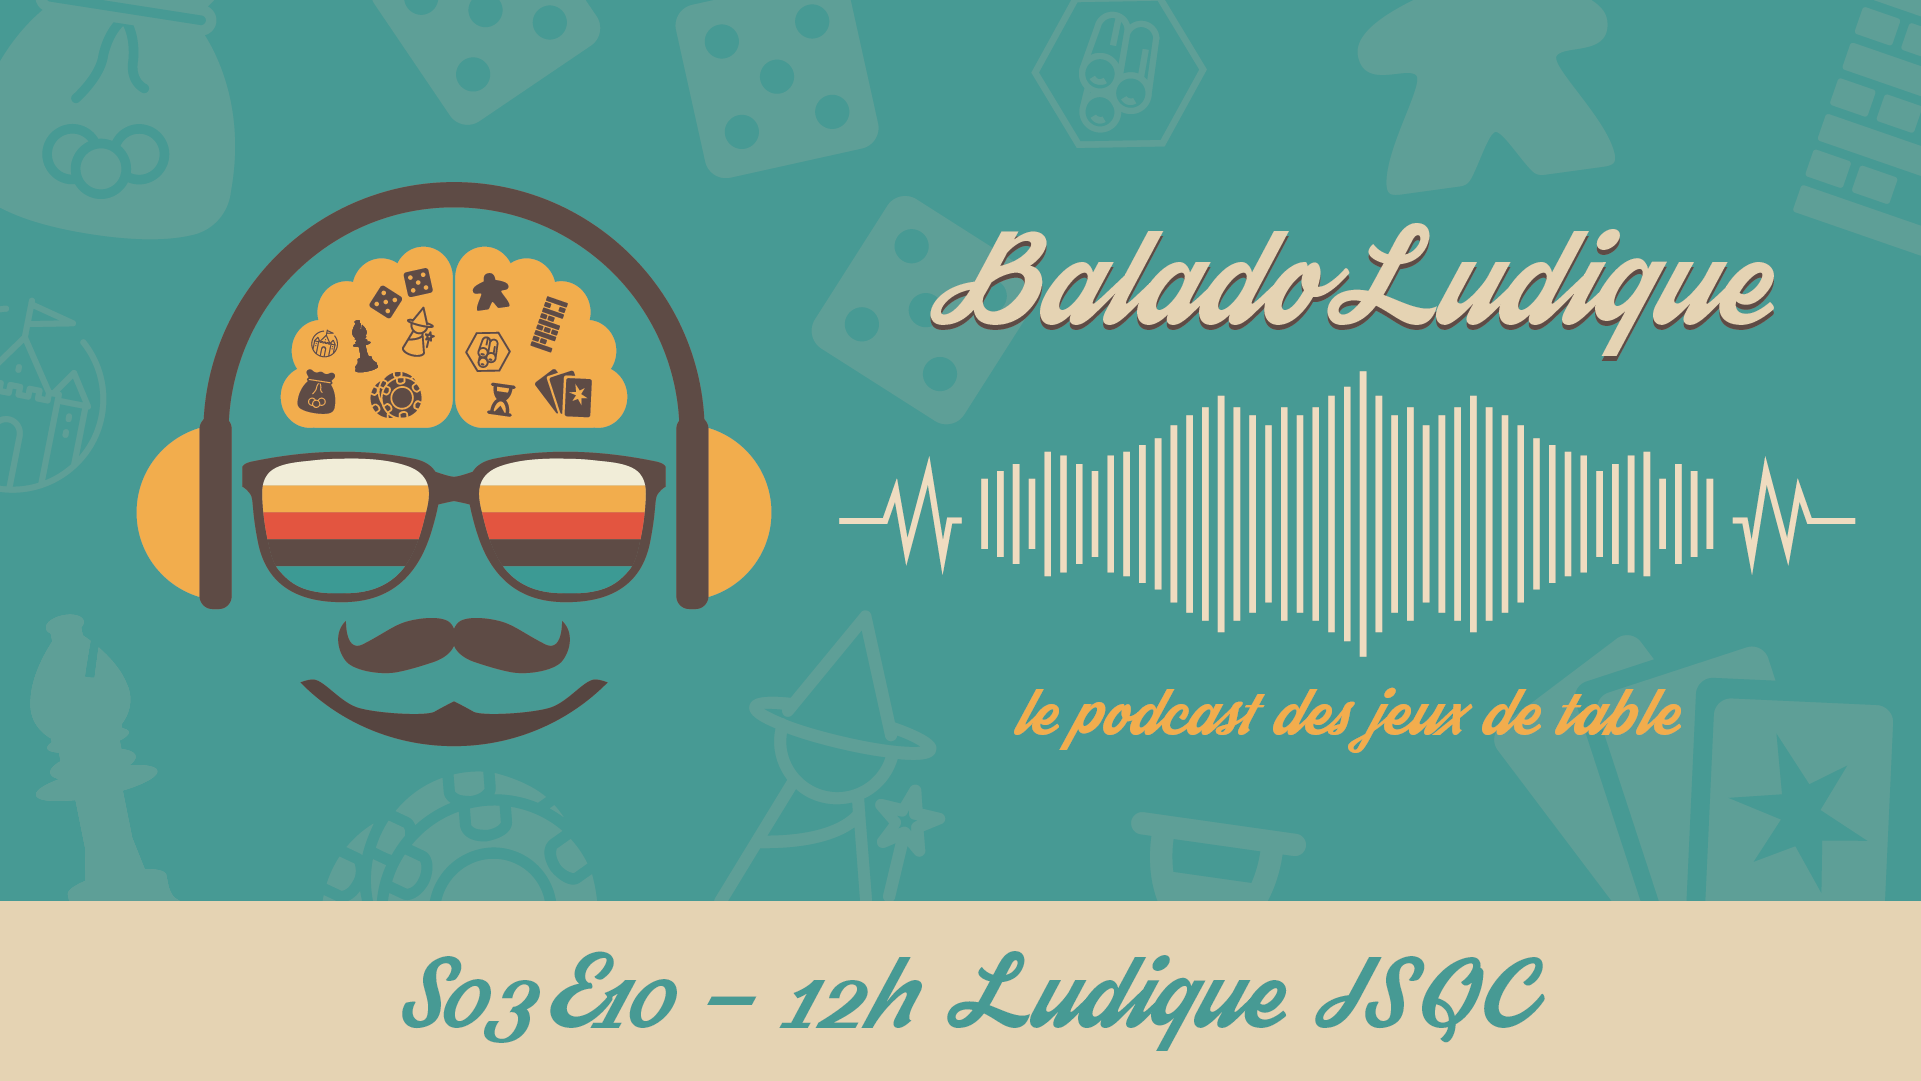 12h Ludique JSQC - BaladoLudique - s03-e10